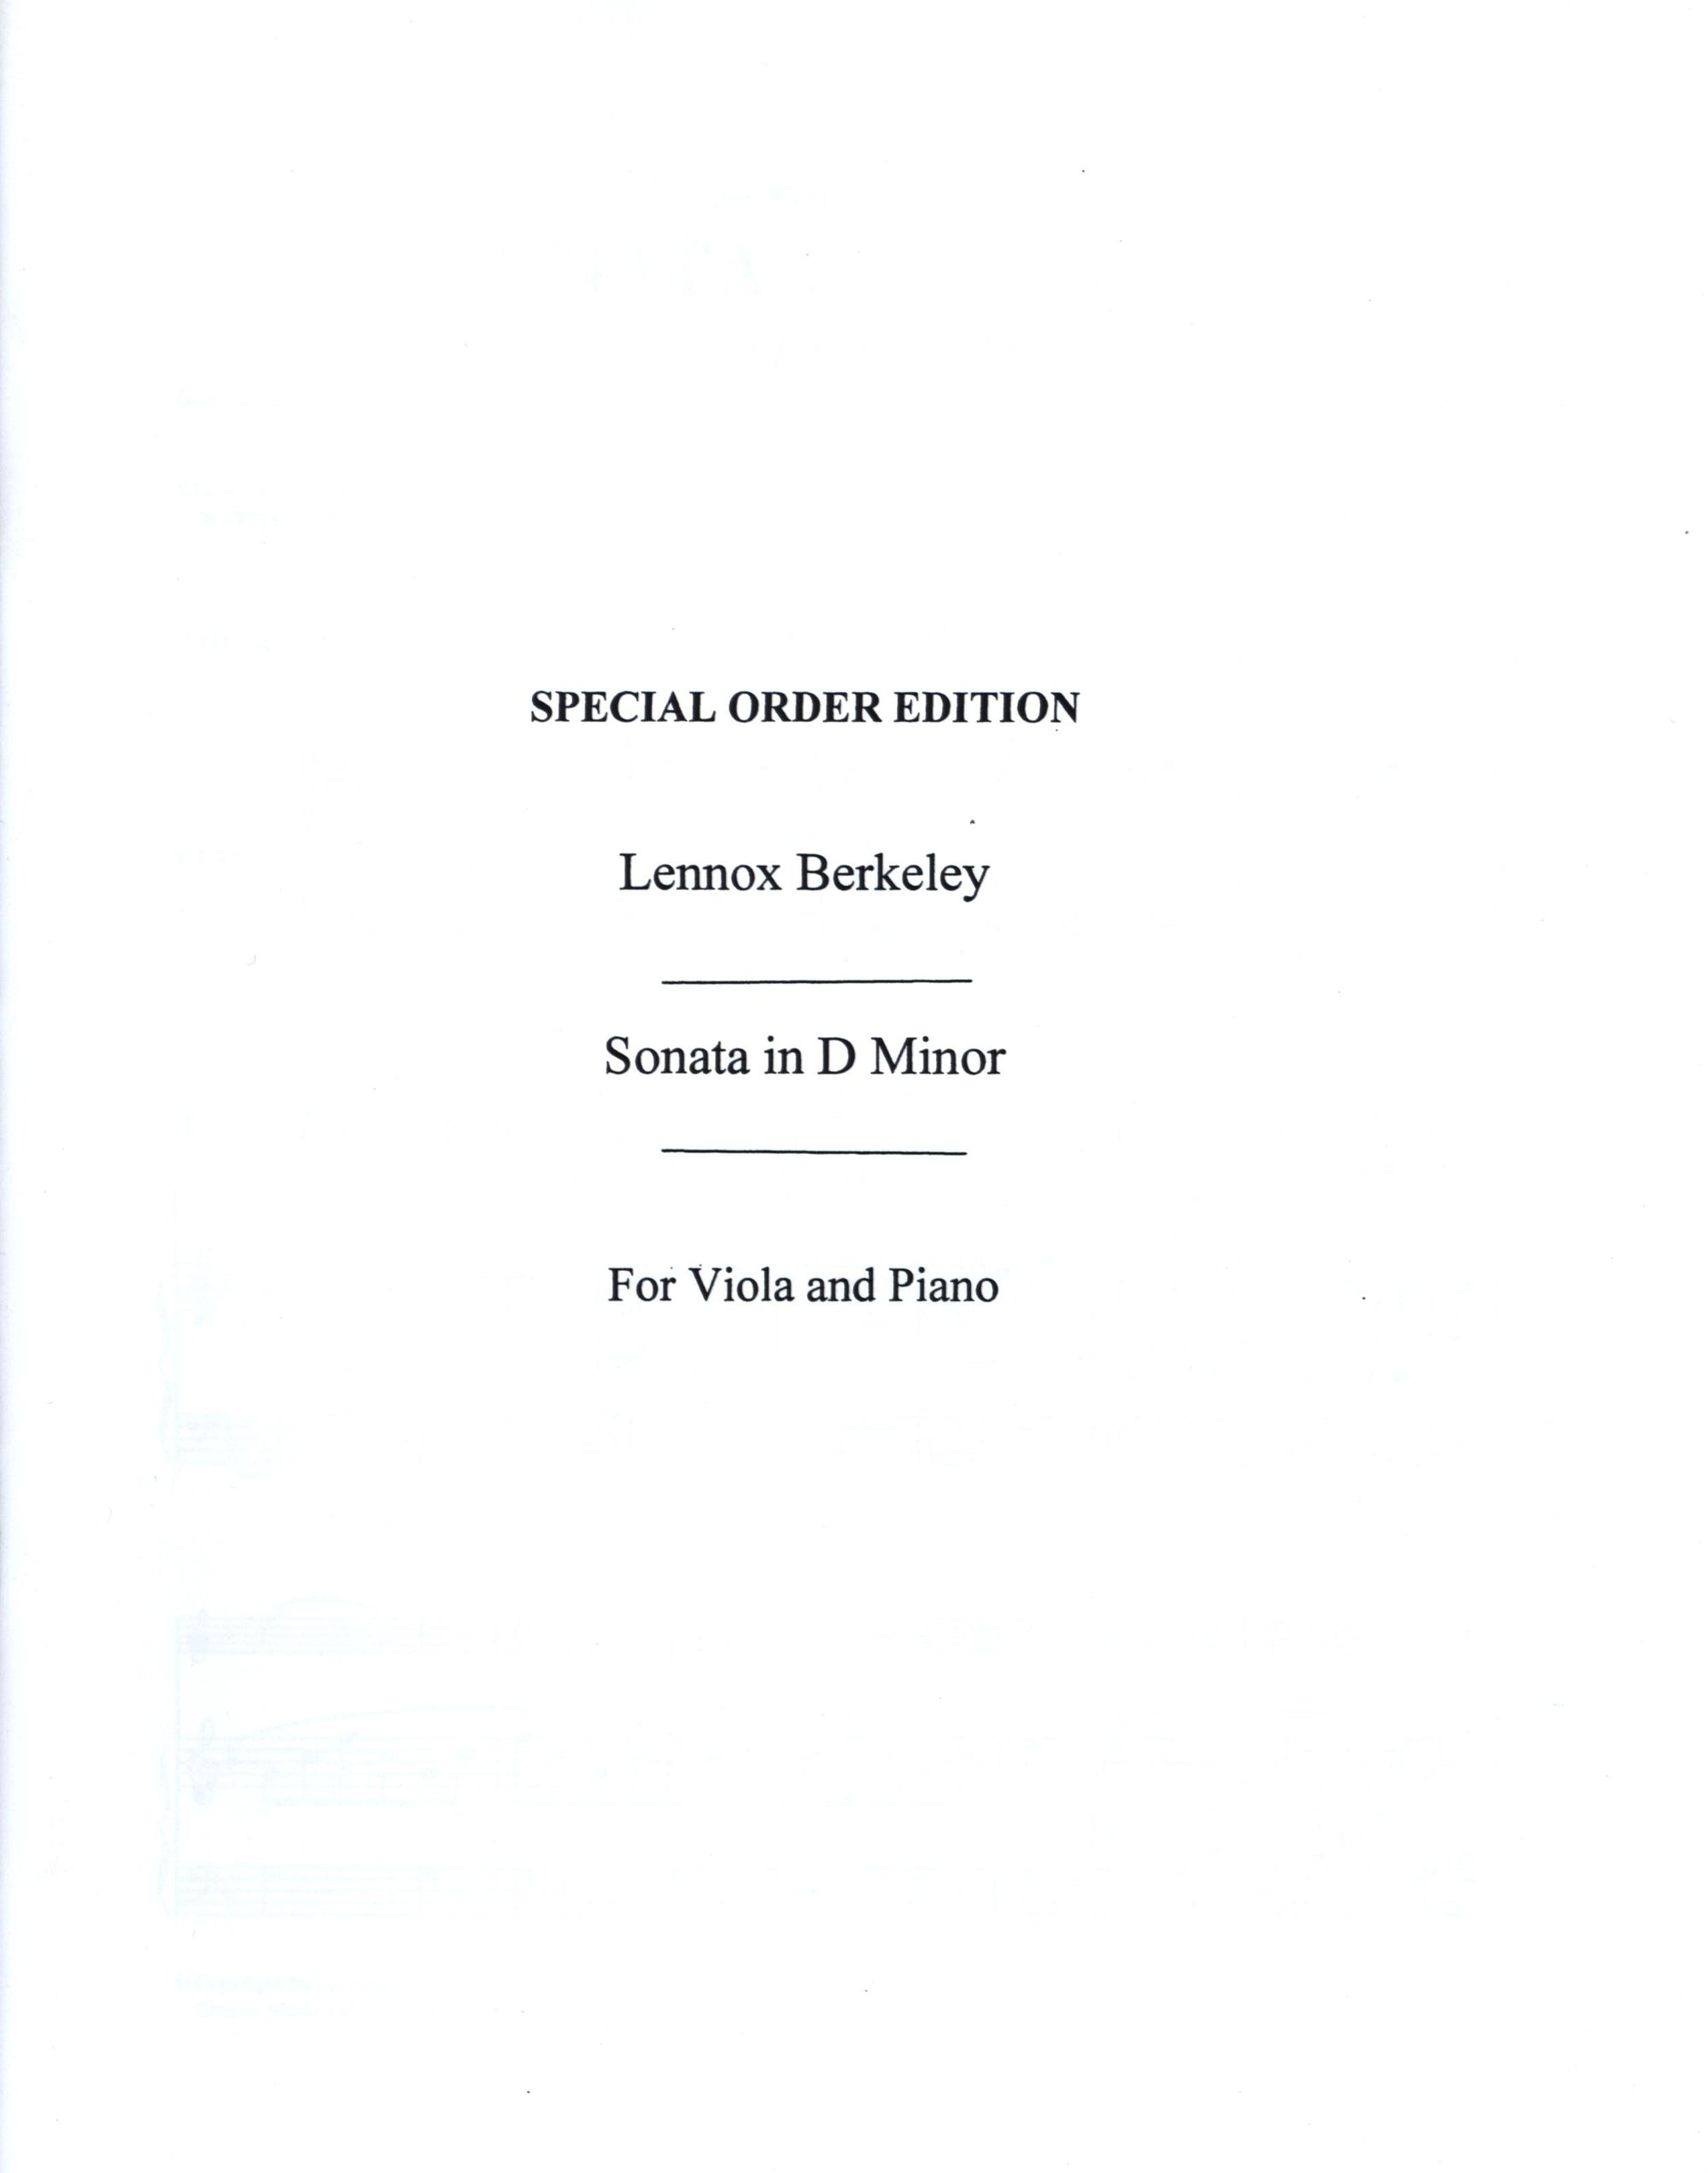 Berkeley: Viola Sonata in D Minor, Op. 22